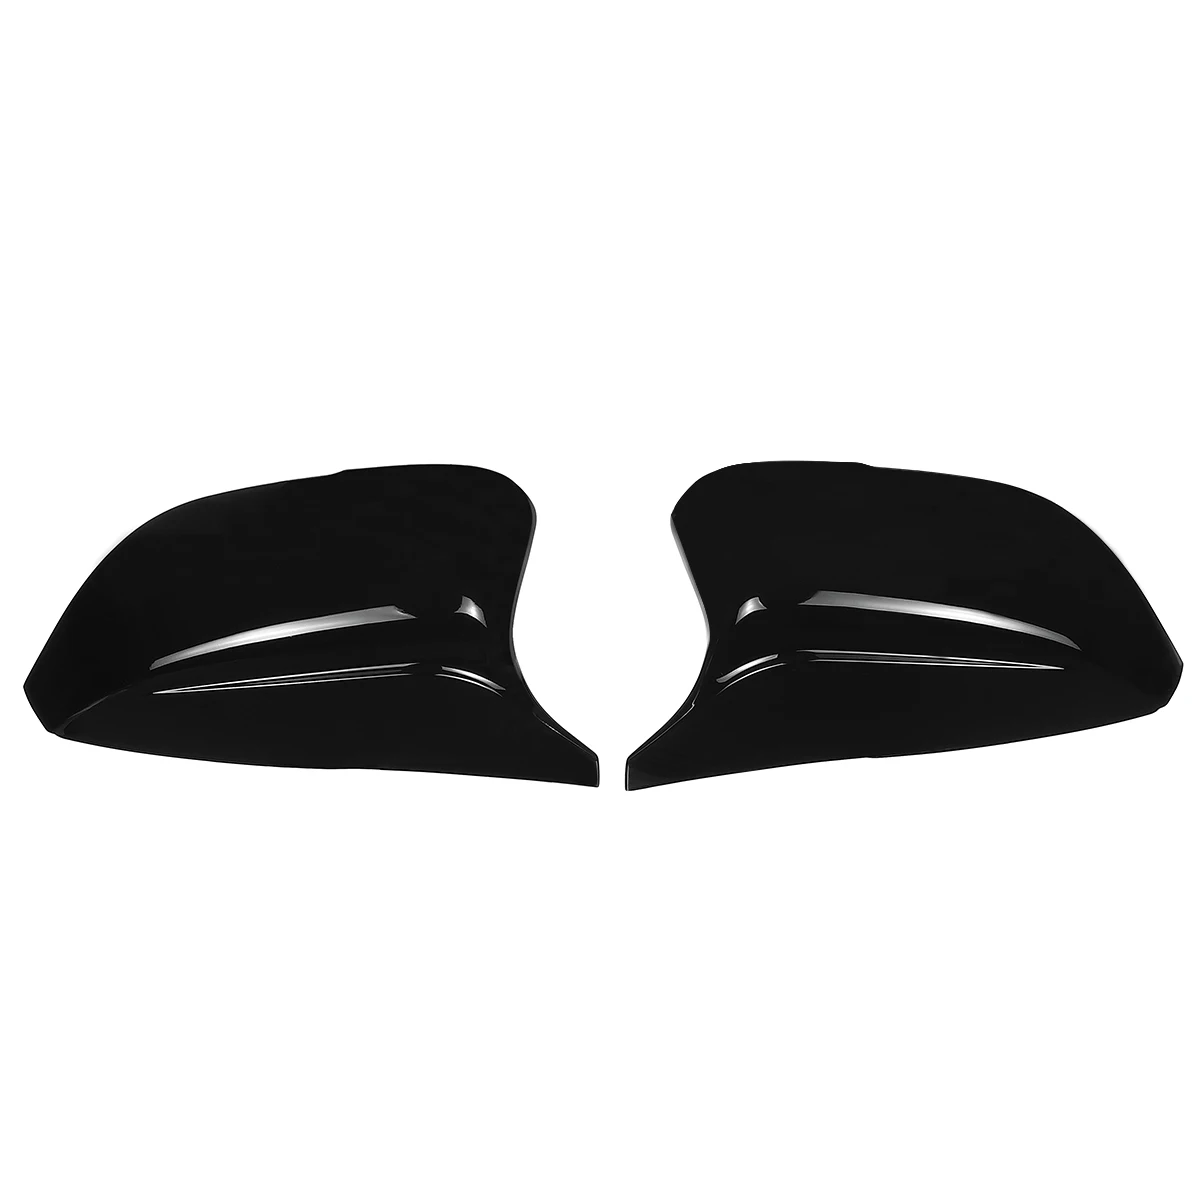 

Car Glossy Black Side Door Rearview Mirror Cover Cap for Infiniti Q50 Q60 QX30 Q70 2014-2021 Rear View Mirror Cover Trim